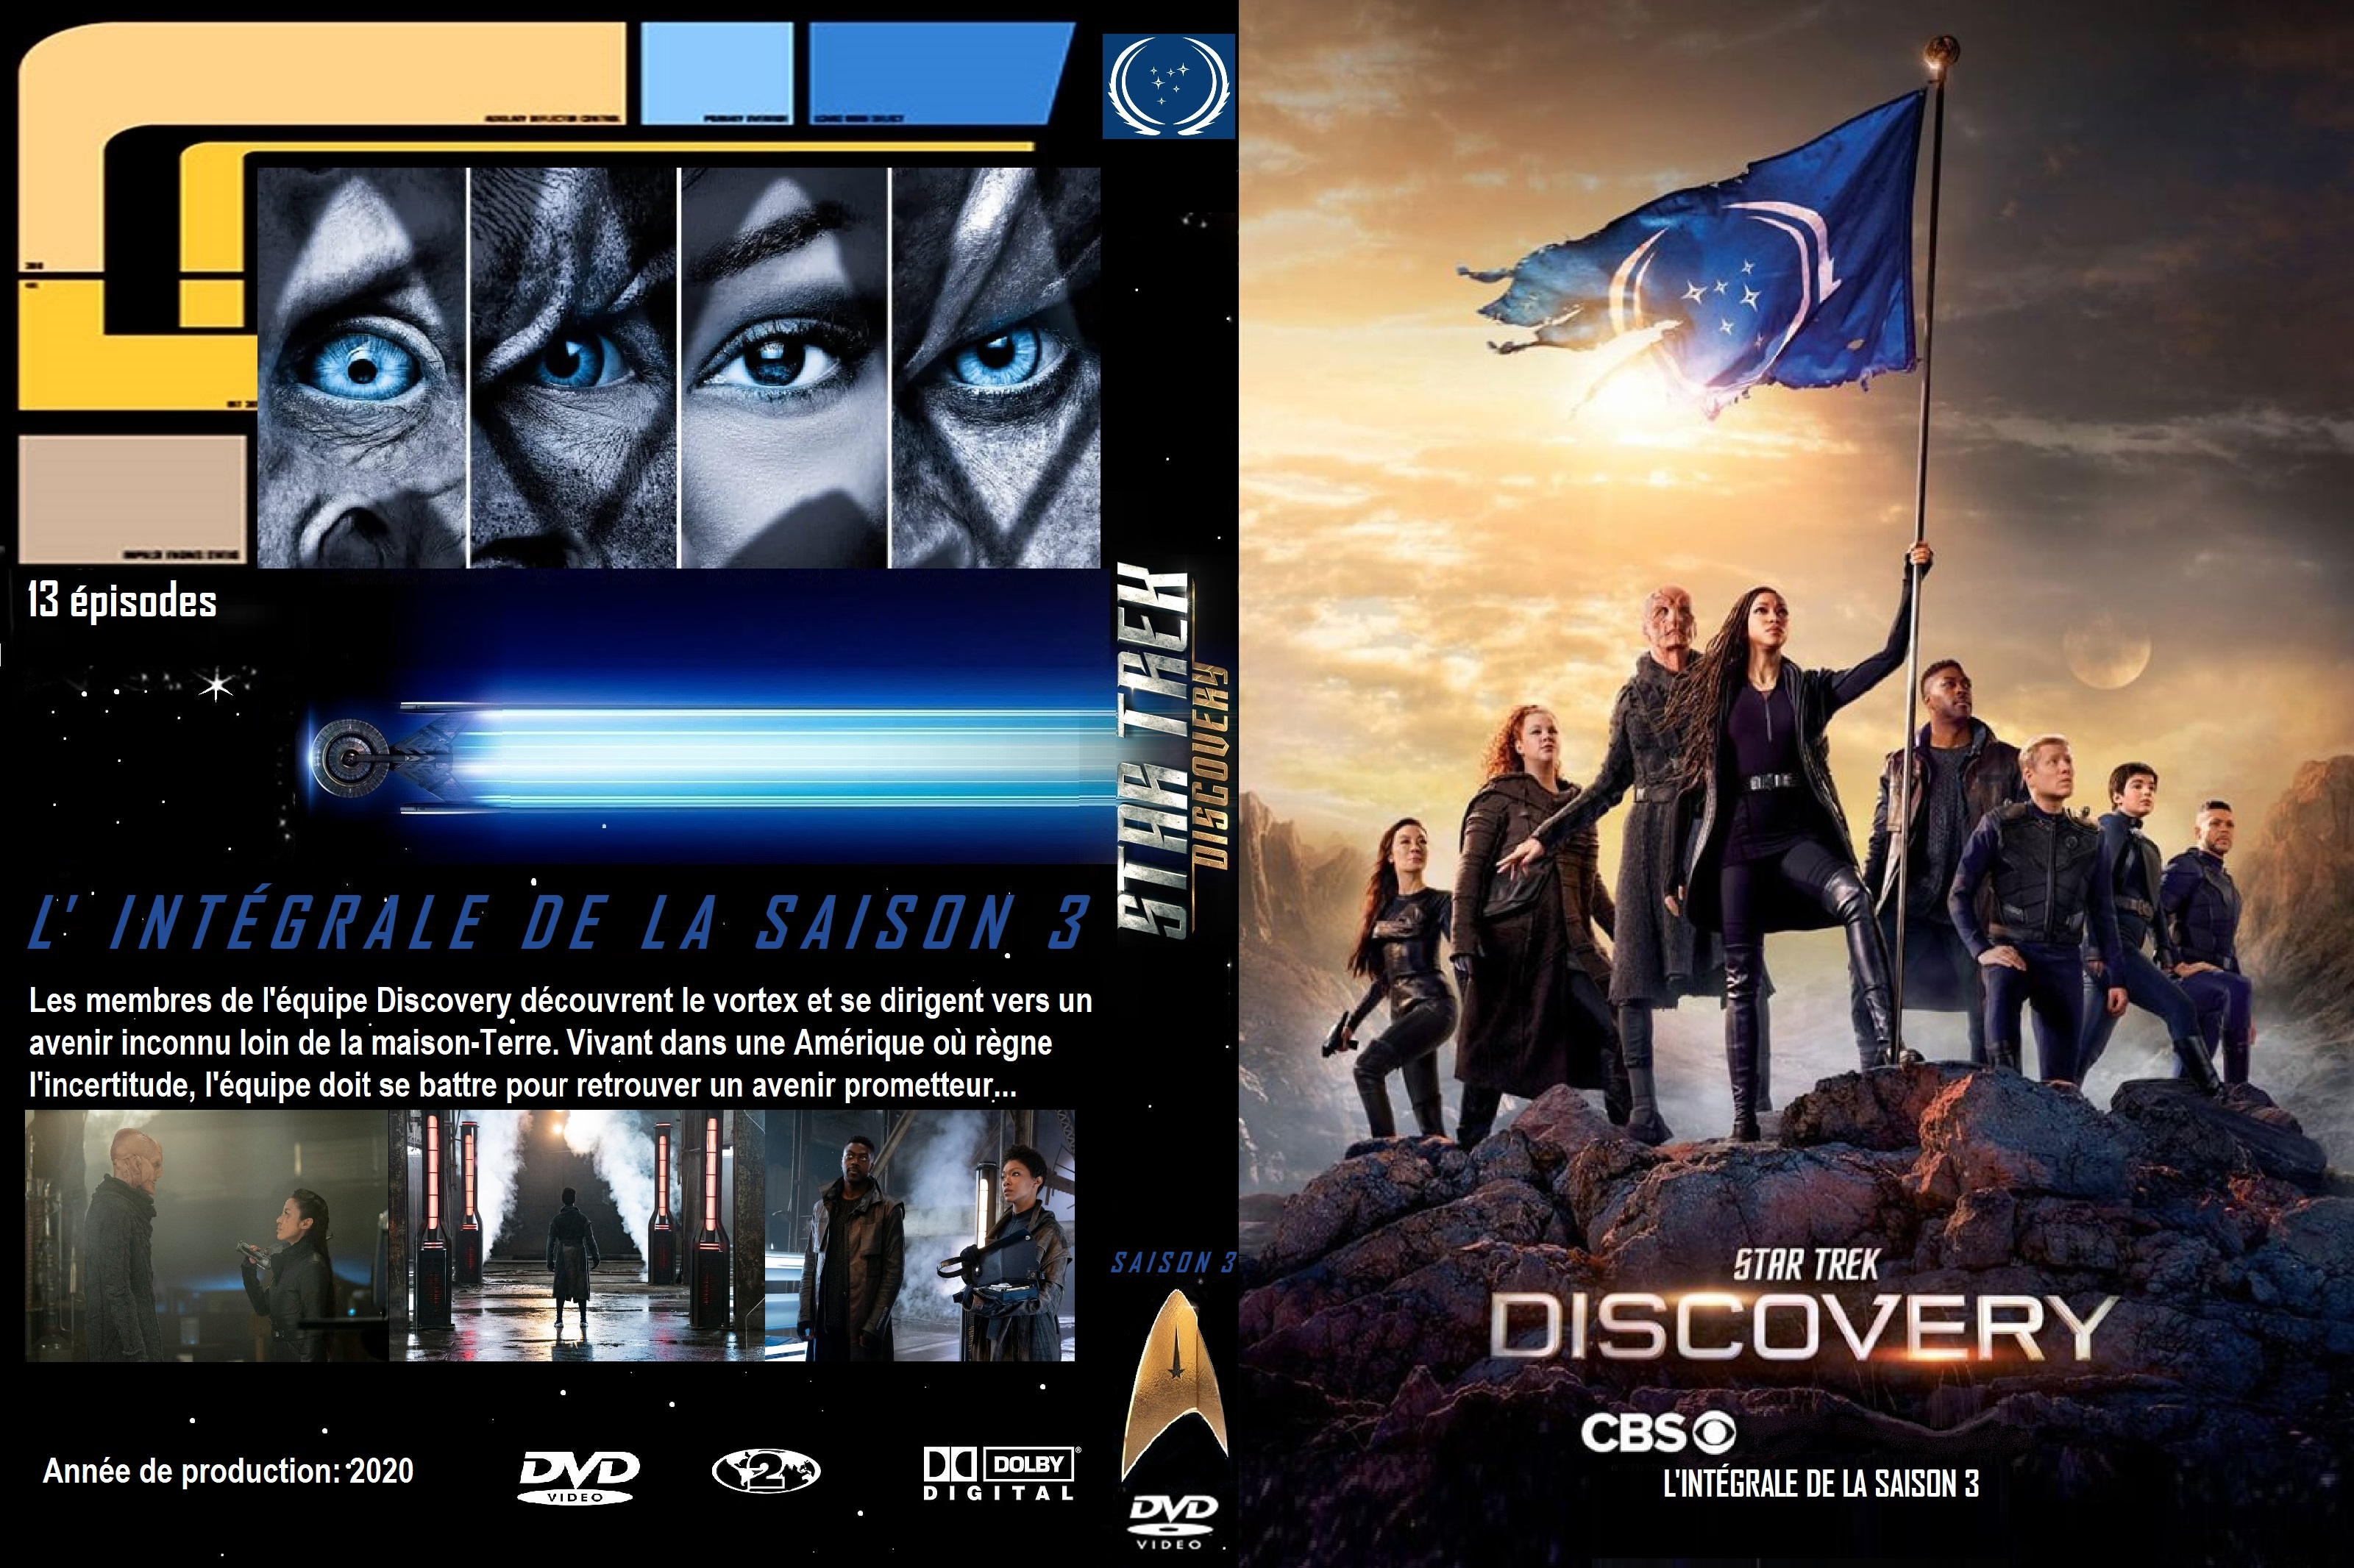 Jaquette DVD Star Trek Discovery saison 3 custom